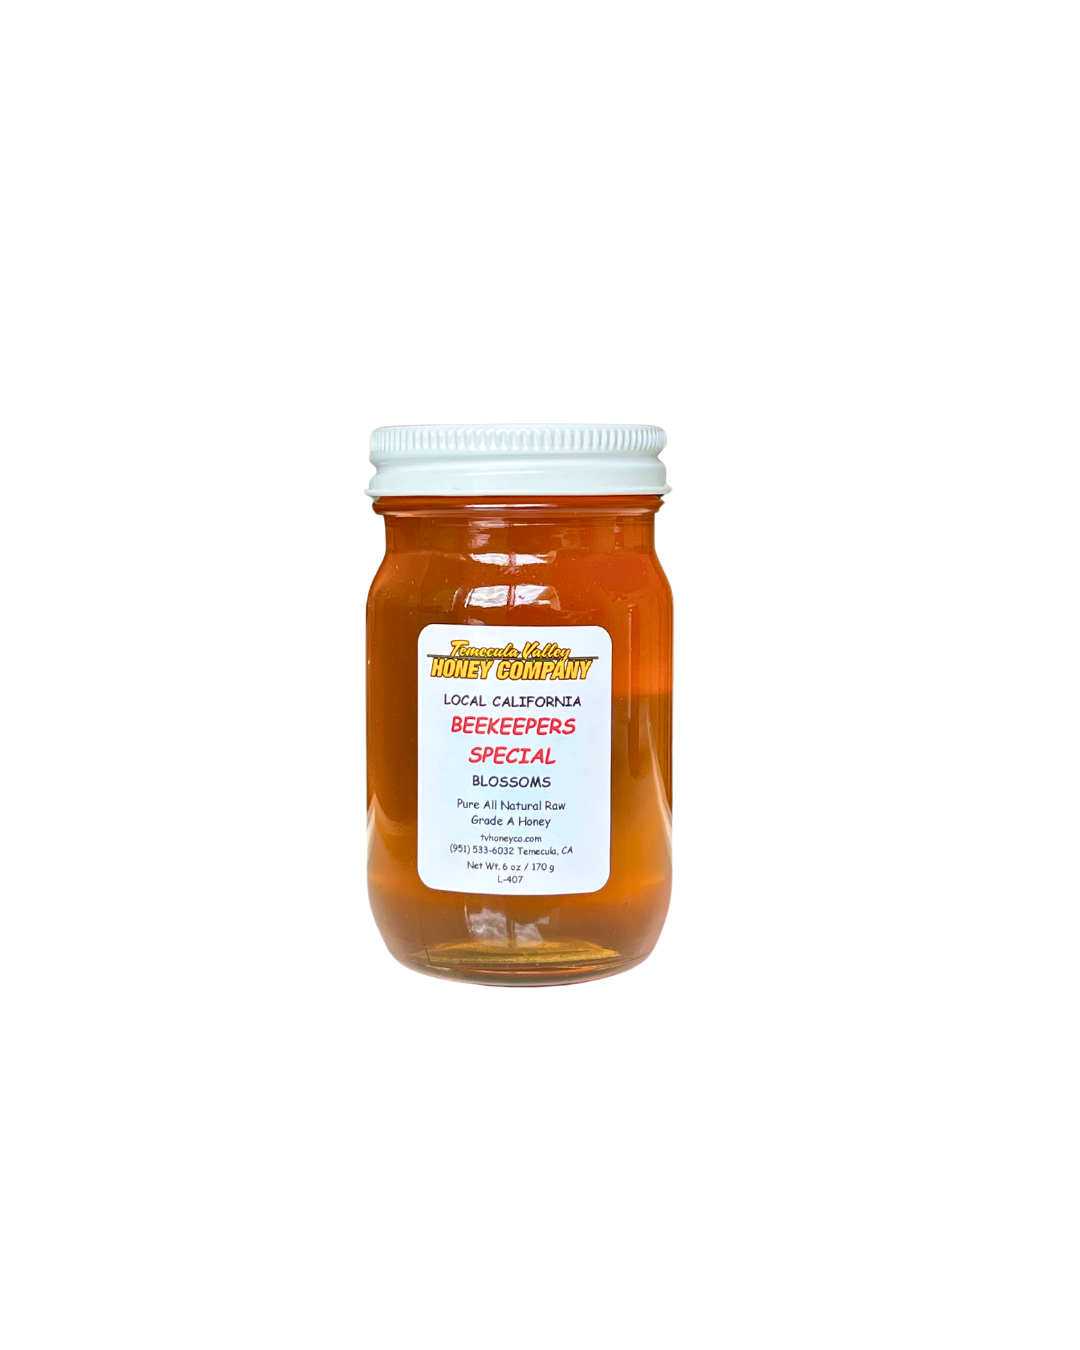 Temecula Valley Honey Company, Beekeepers Special, 6 oz jar